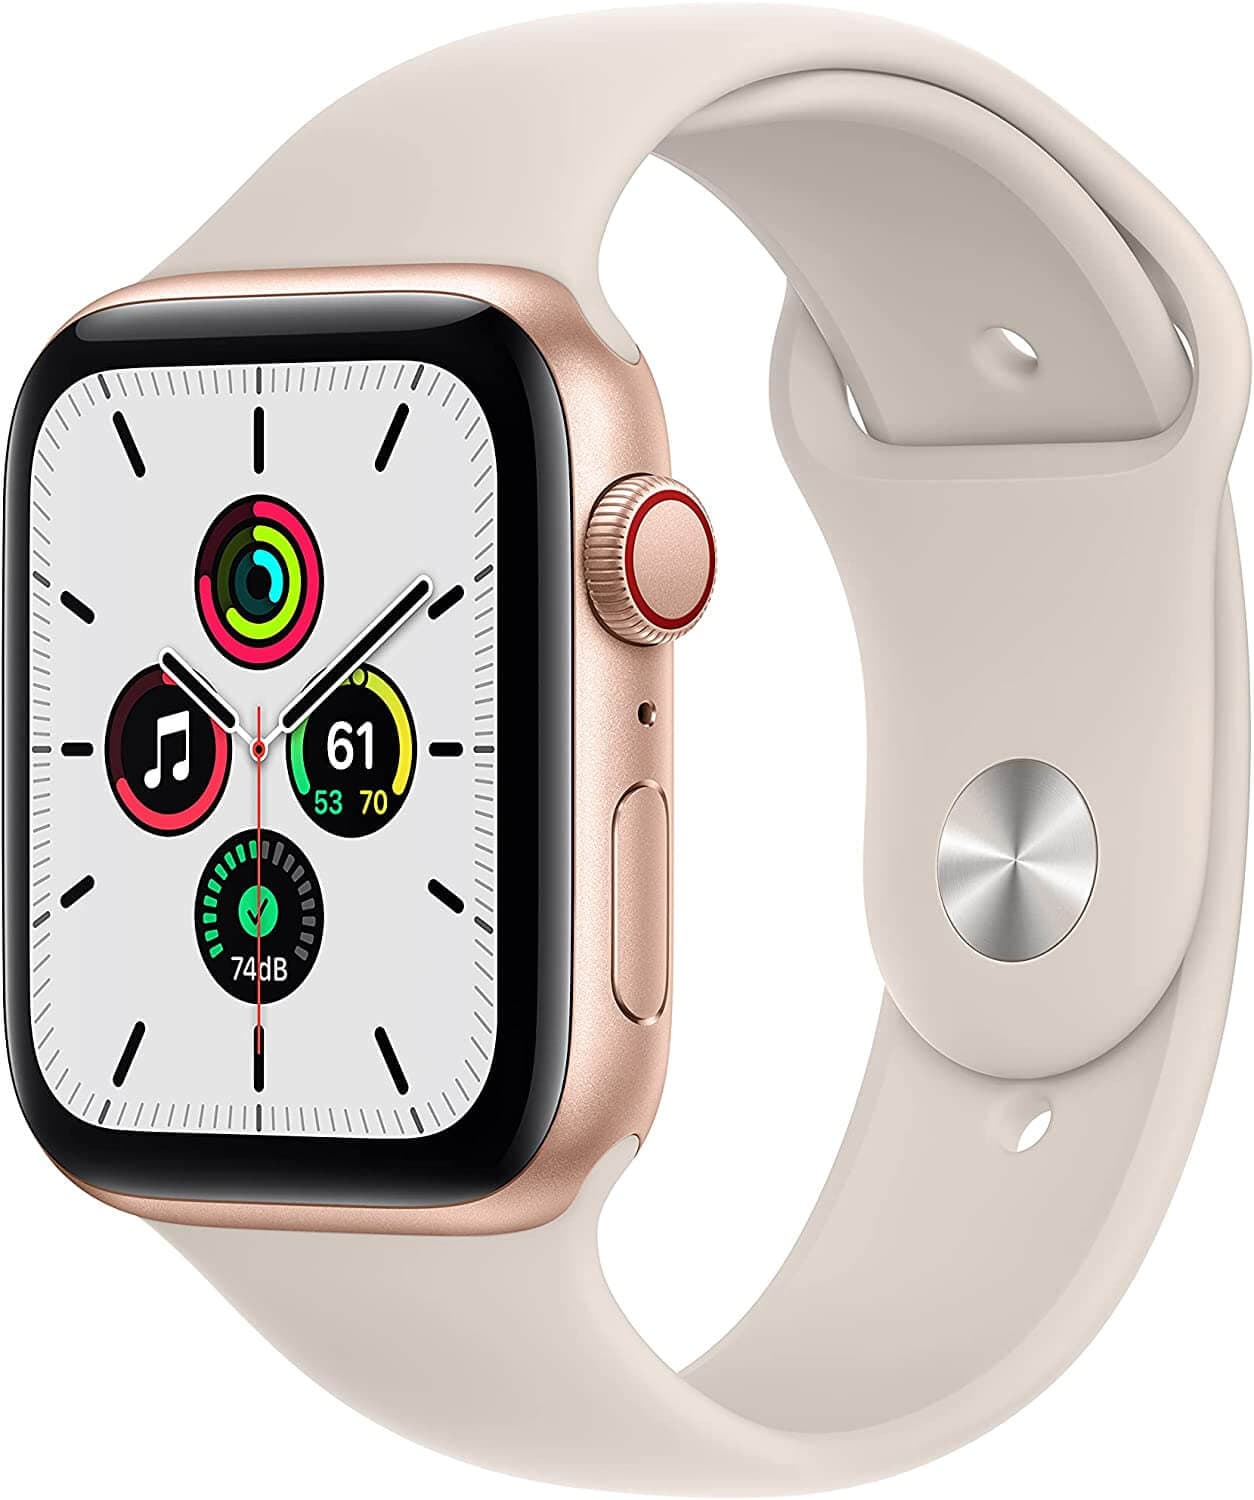 Visit the Apple Store Apple watch Apple iWatch SE 40MM (GPS + Cellular) Smart Watch